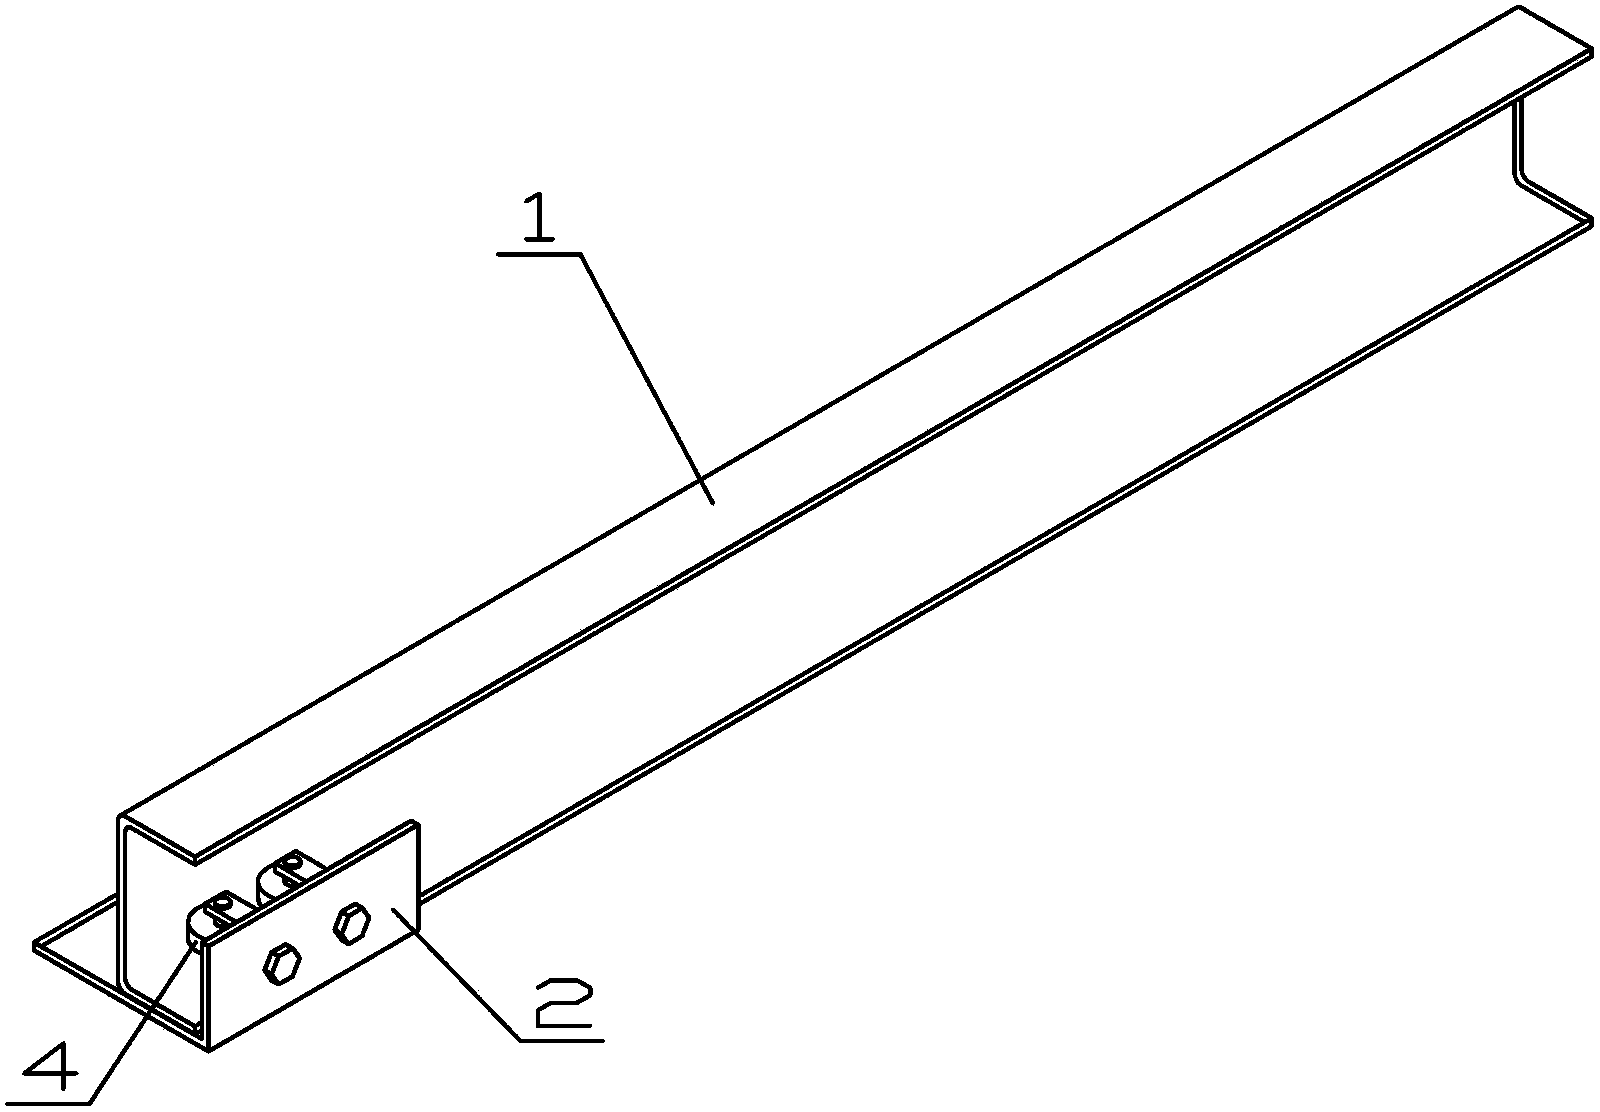 Method and device for replacing wheel group of bridge crane